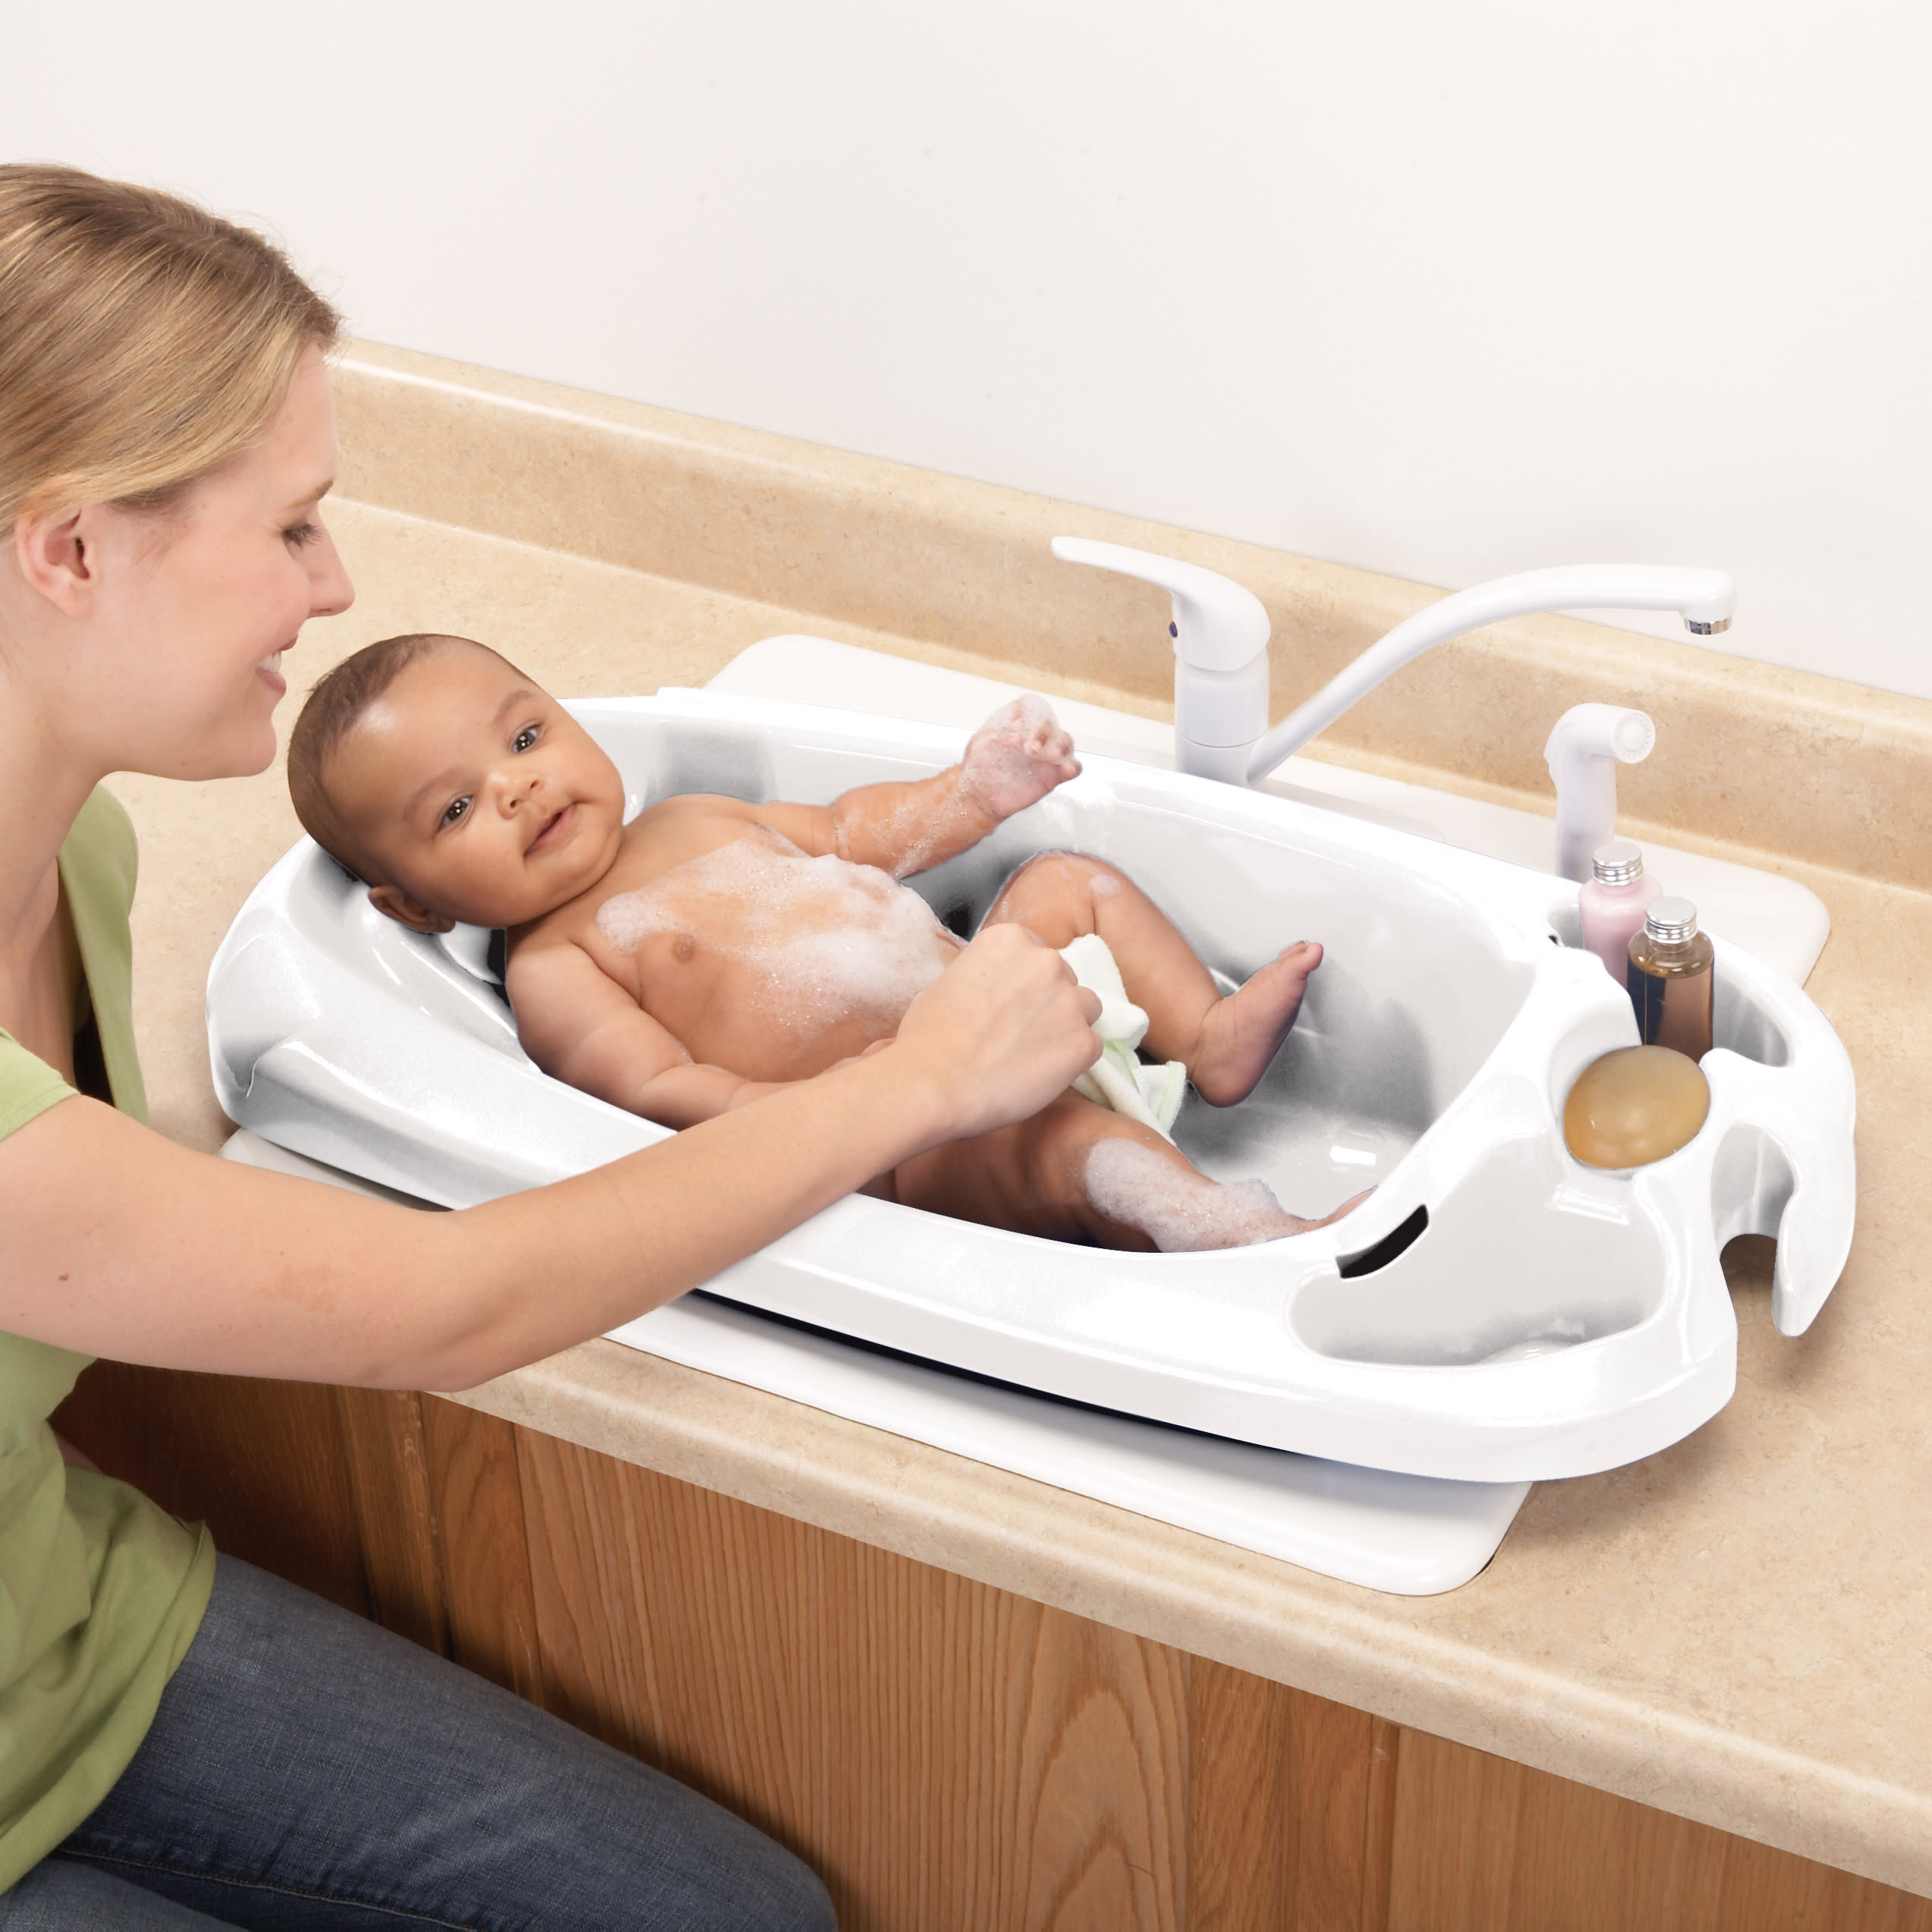 Safety 1st Newborn to Toddler Bathtub, White - image 3 of 7